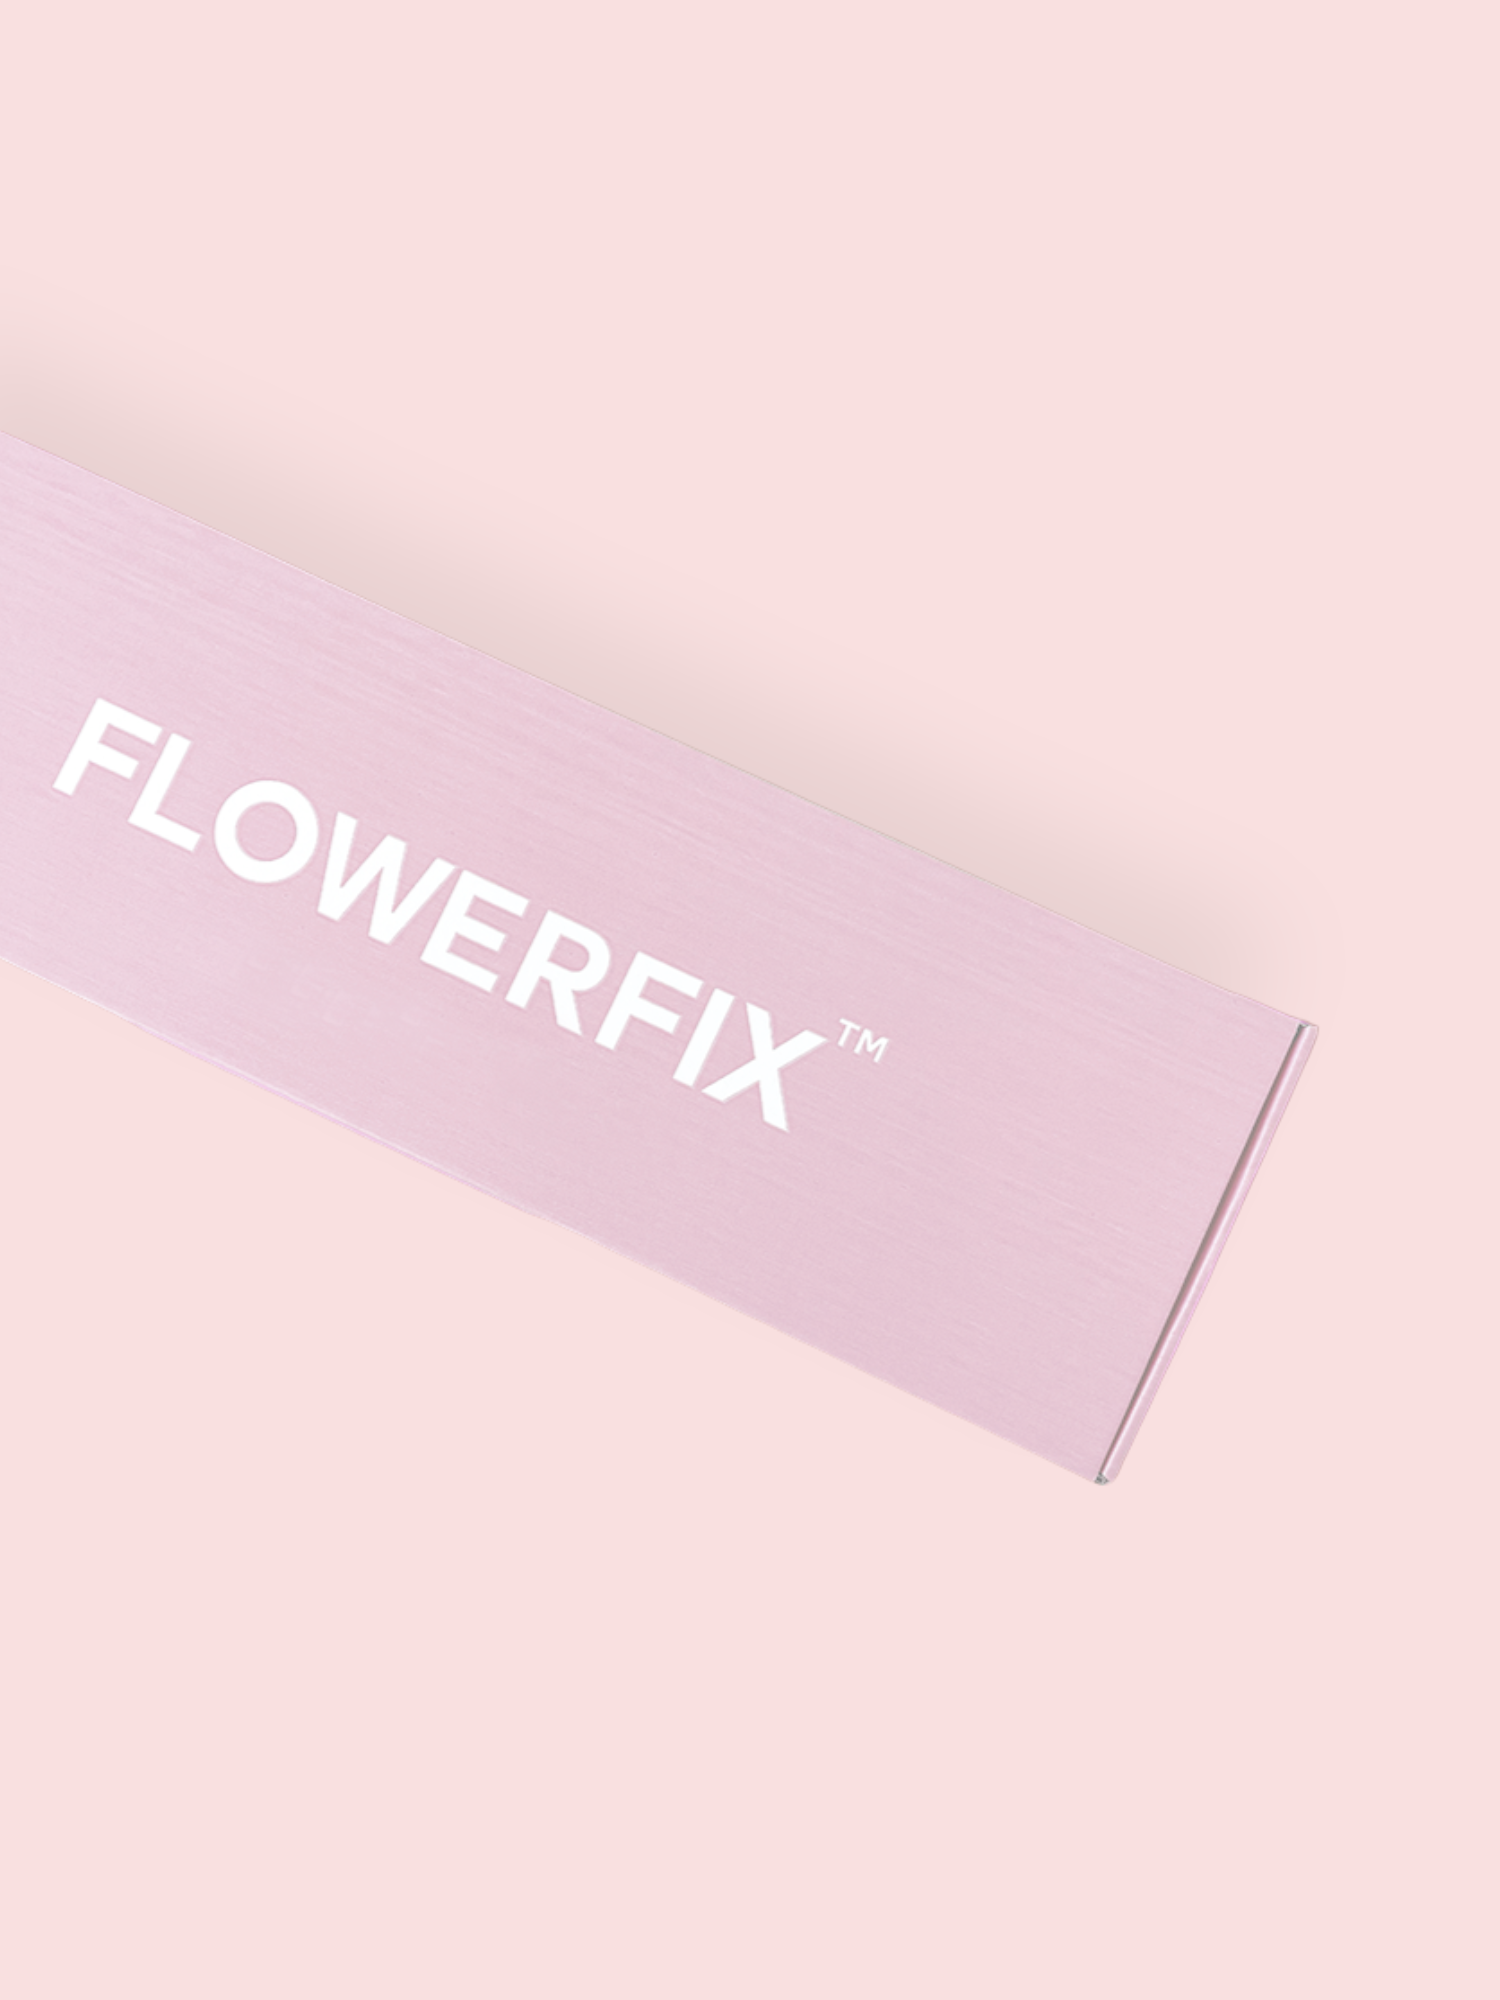 Monthly Flower Club - FLOWERFIX